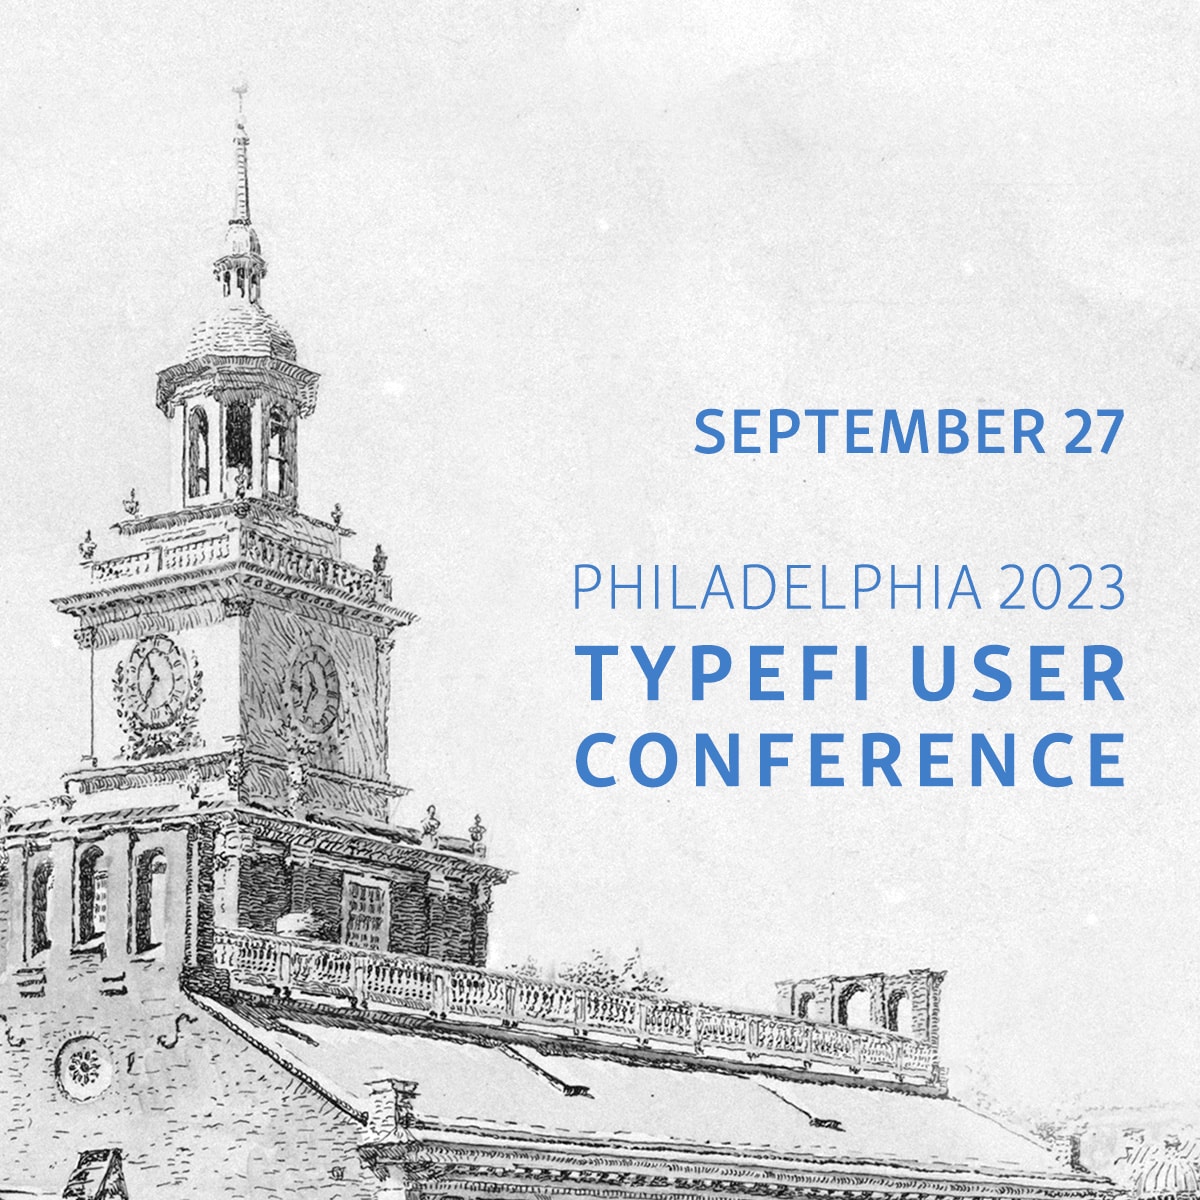 Typefi User Conference 2023: Philadelphia